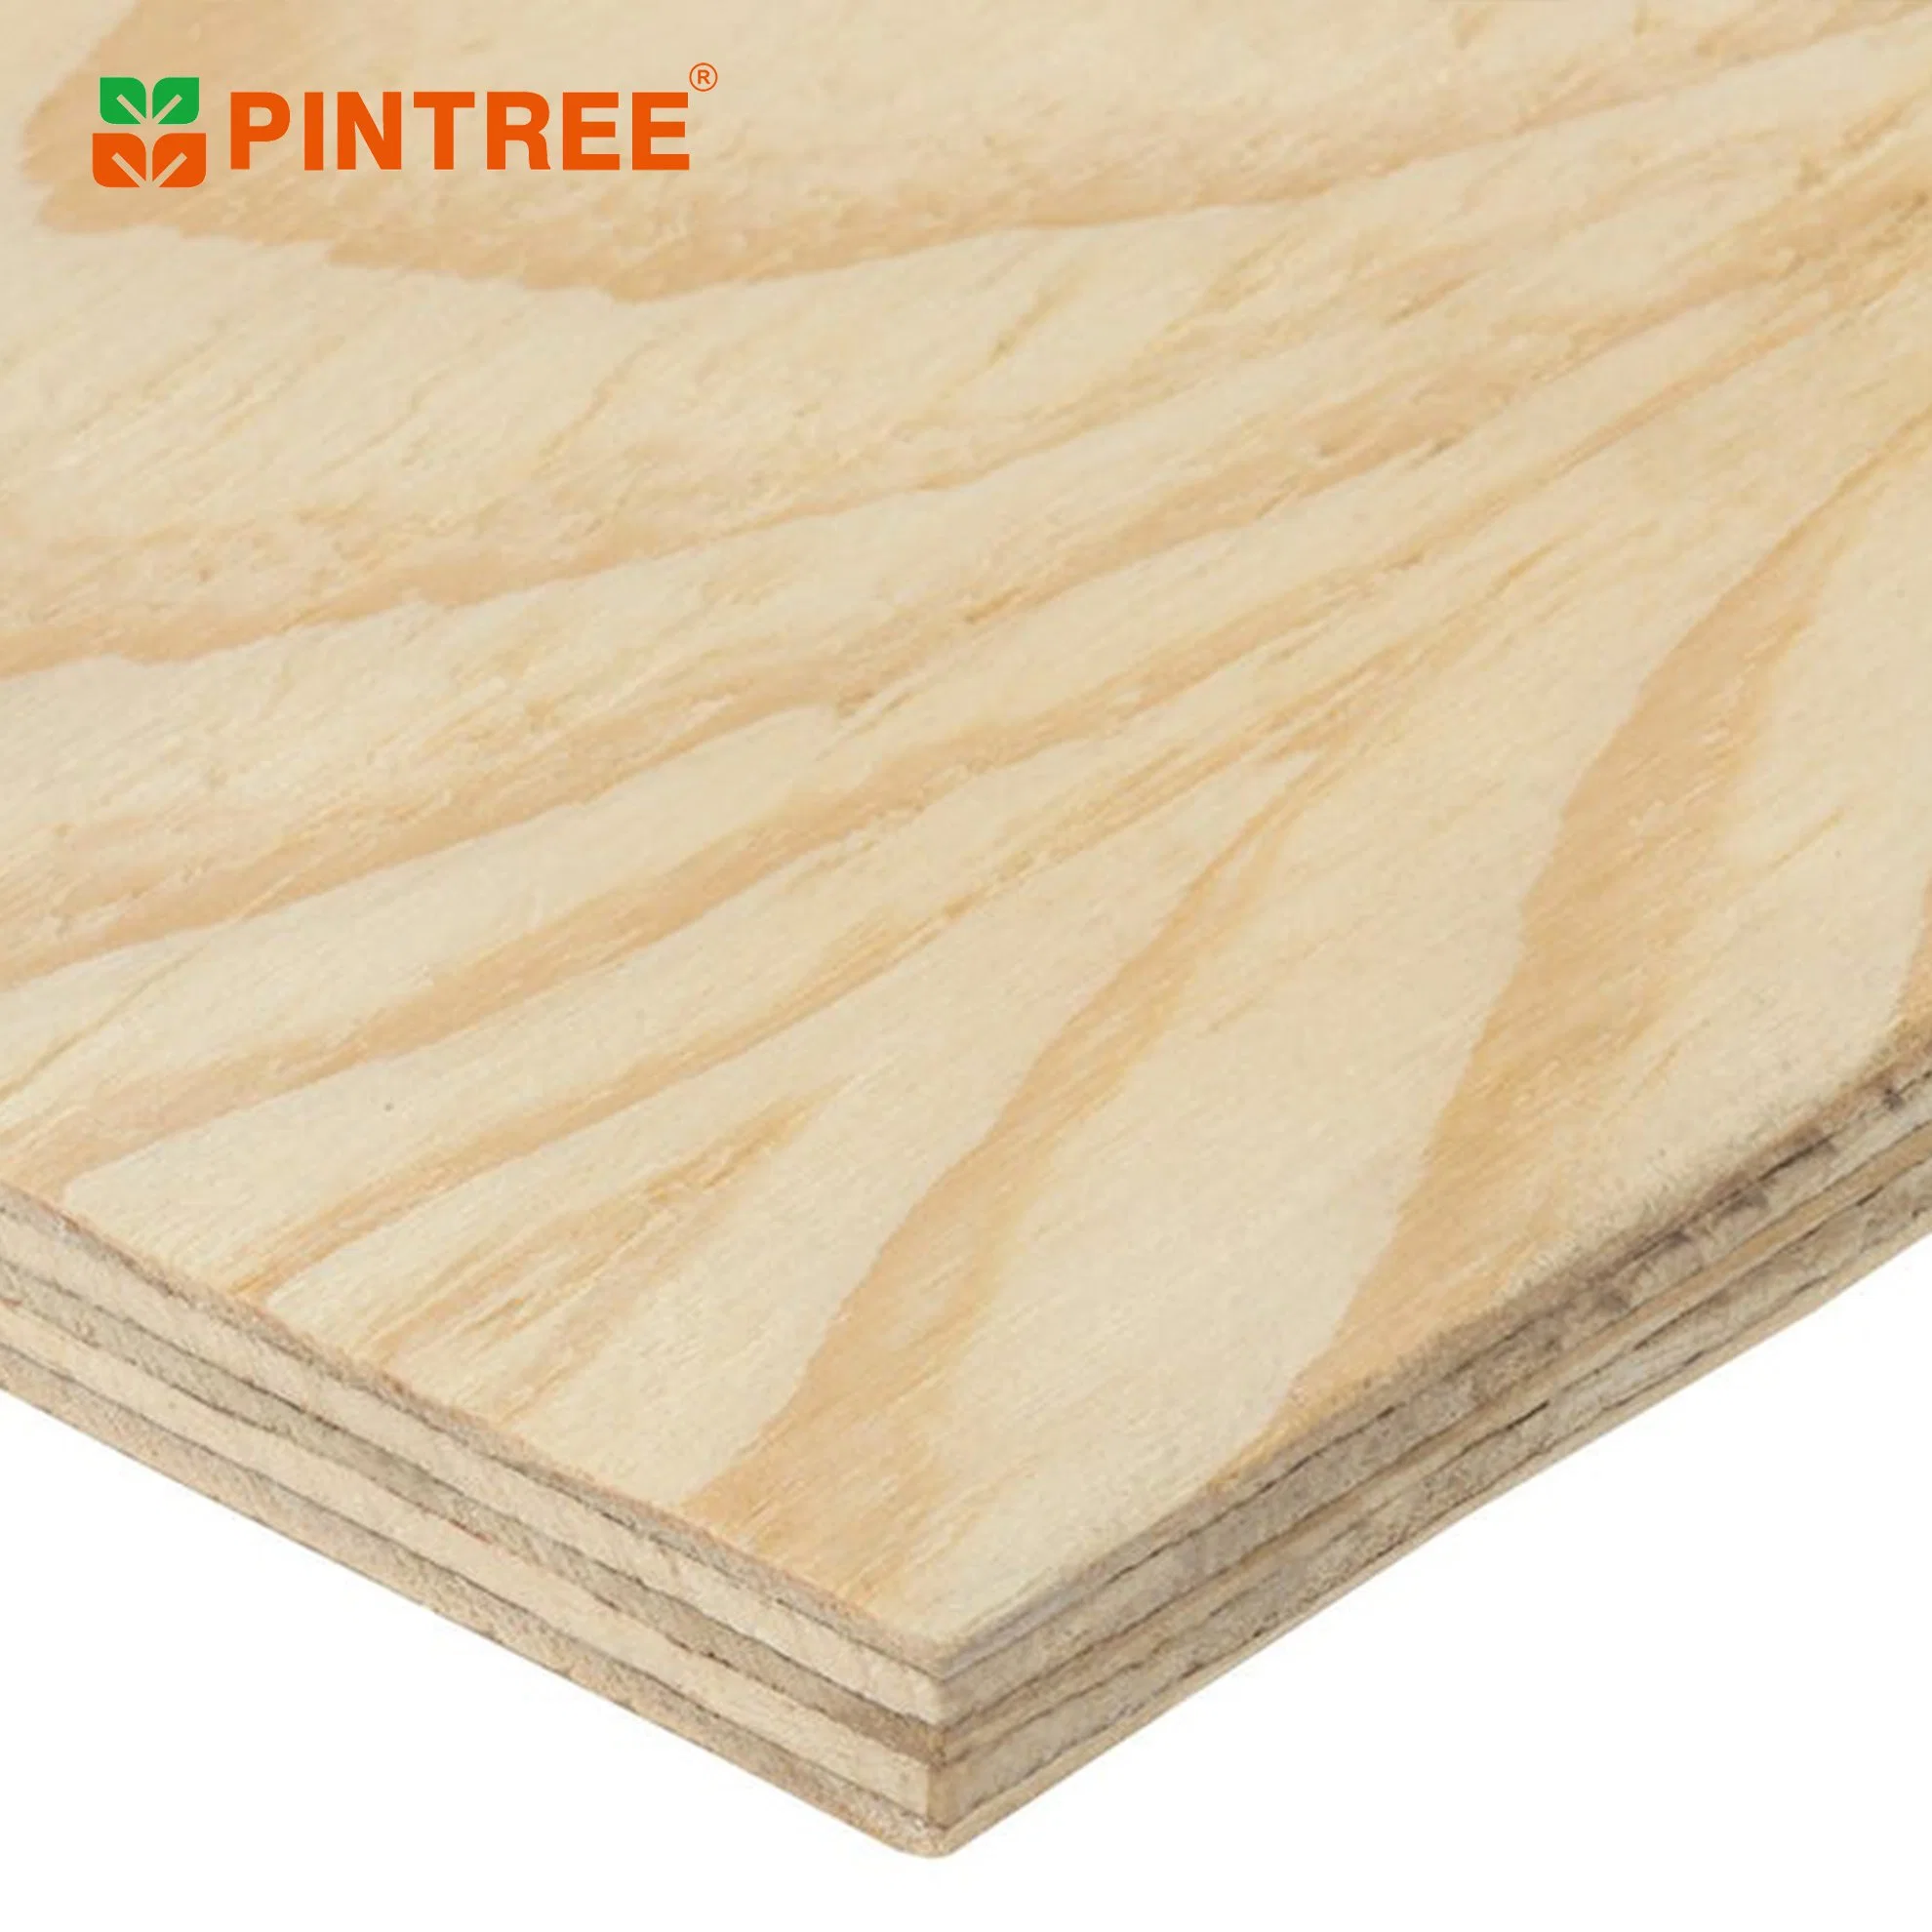 La alta calidad Okoume/Bintangor/Cedro lápiz/Poplar/abedul/Pino frente la madera contrachapada utiliza en muebles